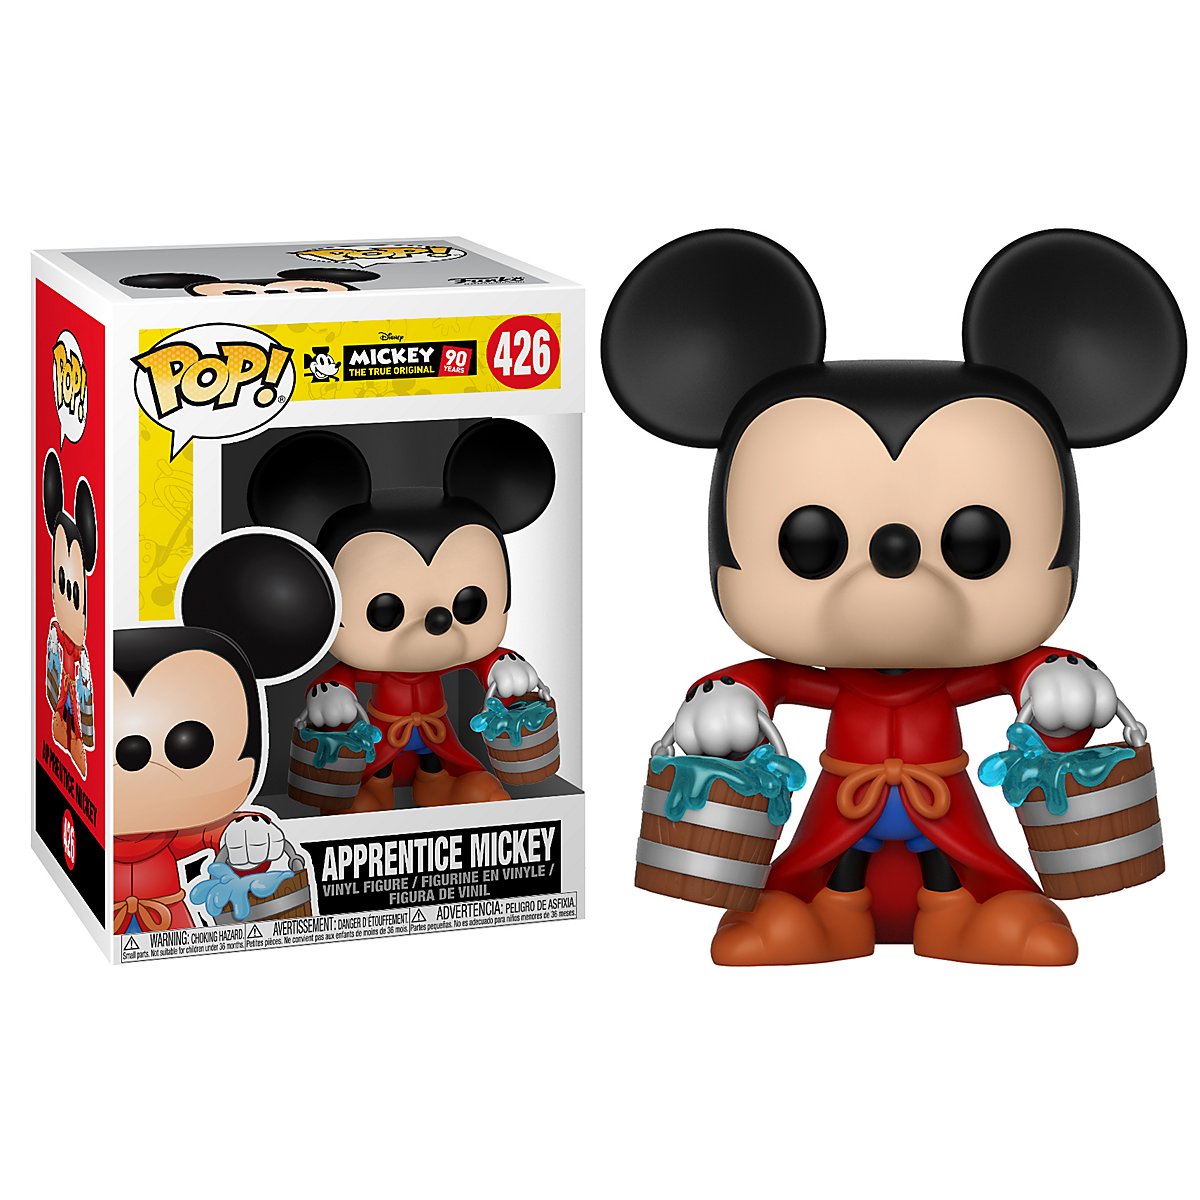 Disney Mickeys 90th Apprentice Mickey Funko Pop Figure